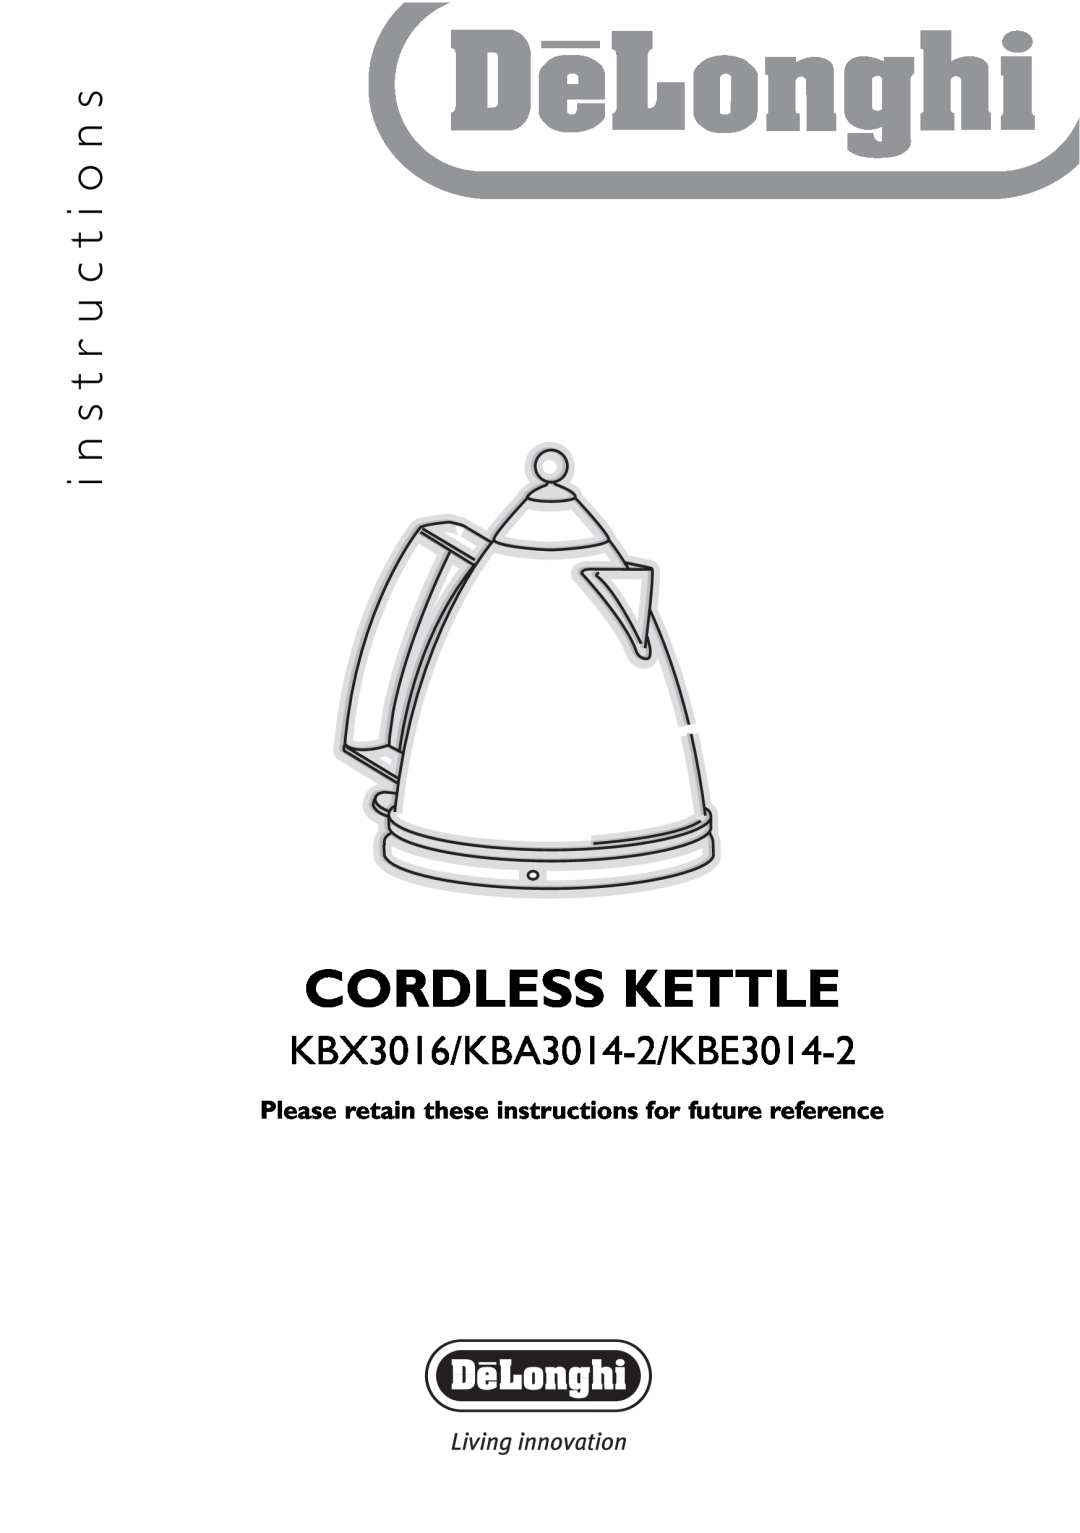 DeLonghi manual Cordless Kettle, i n s t r u c t i o n s, KBX3016/KBA3014-2/KBE3014-2 